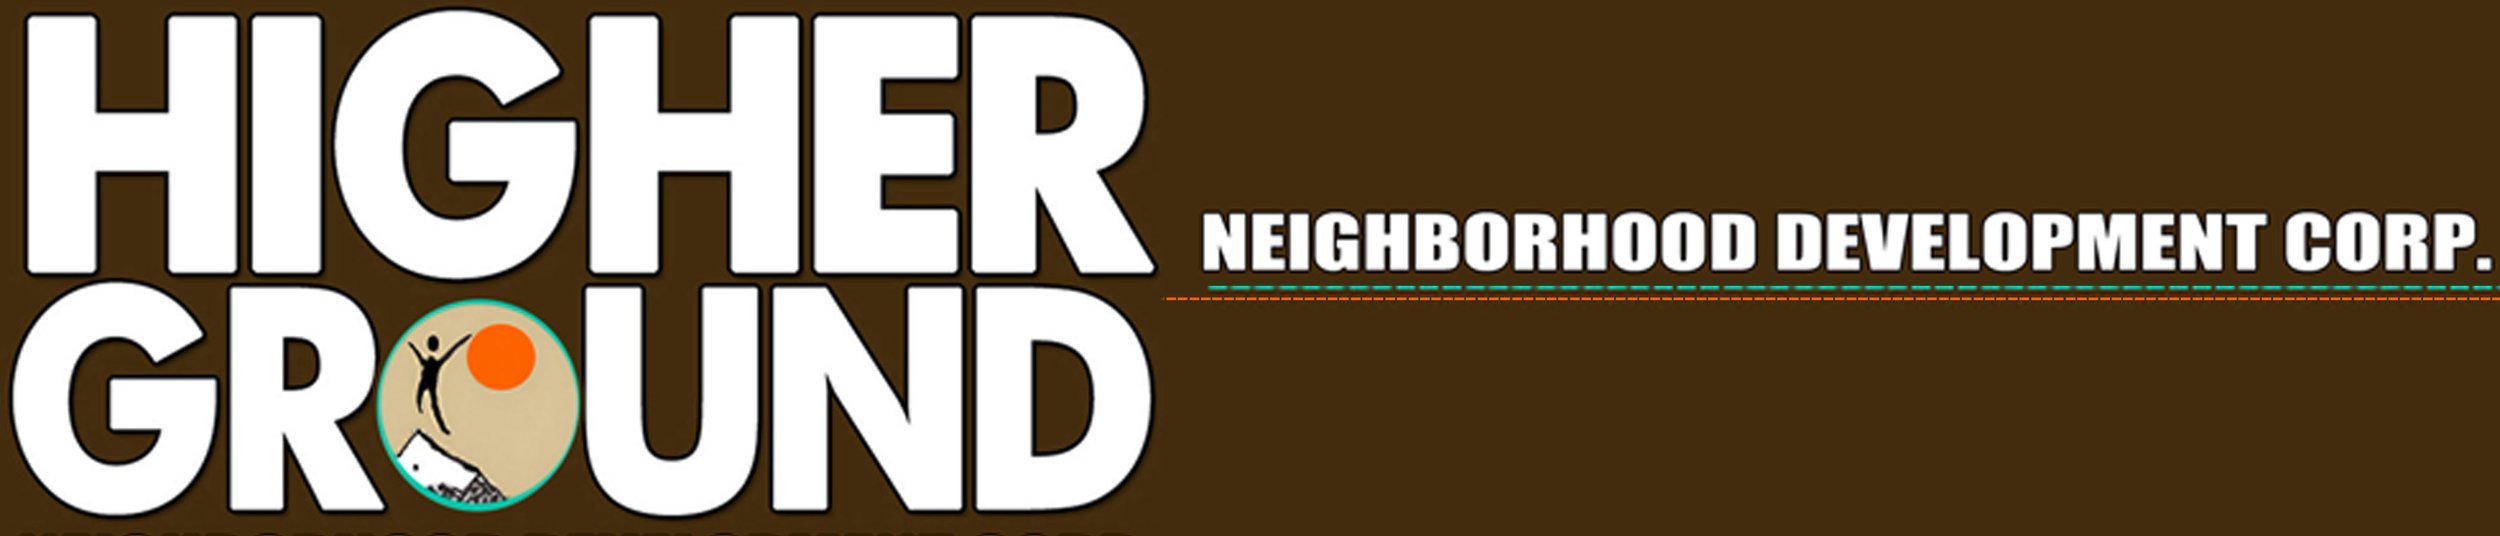 Higher Ground Neighborhood Development Corp.